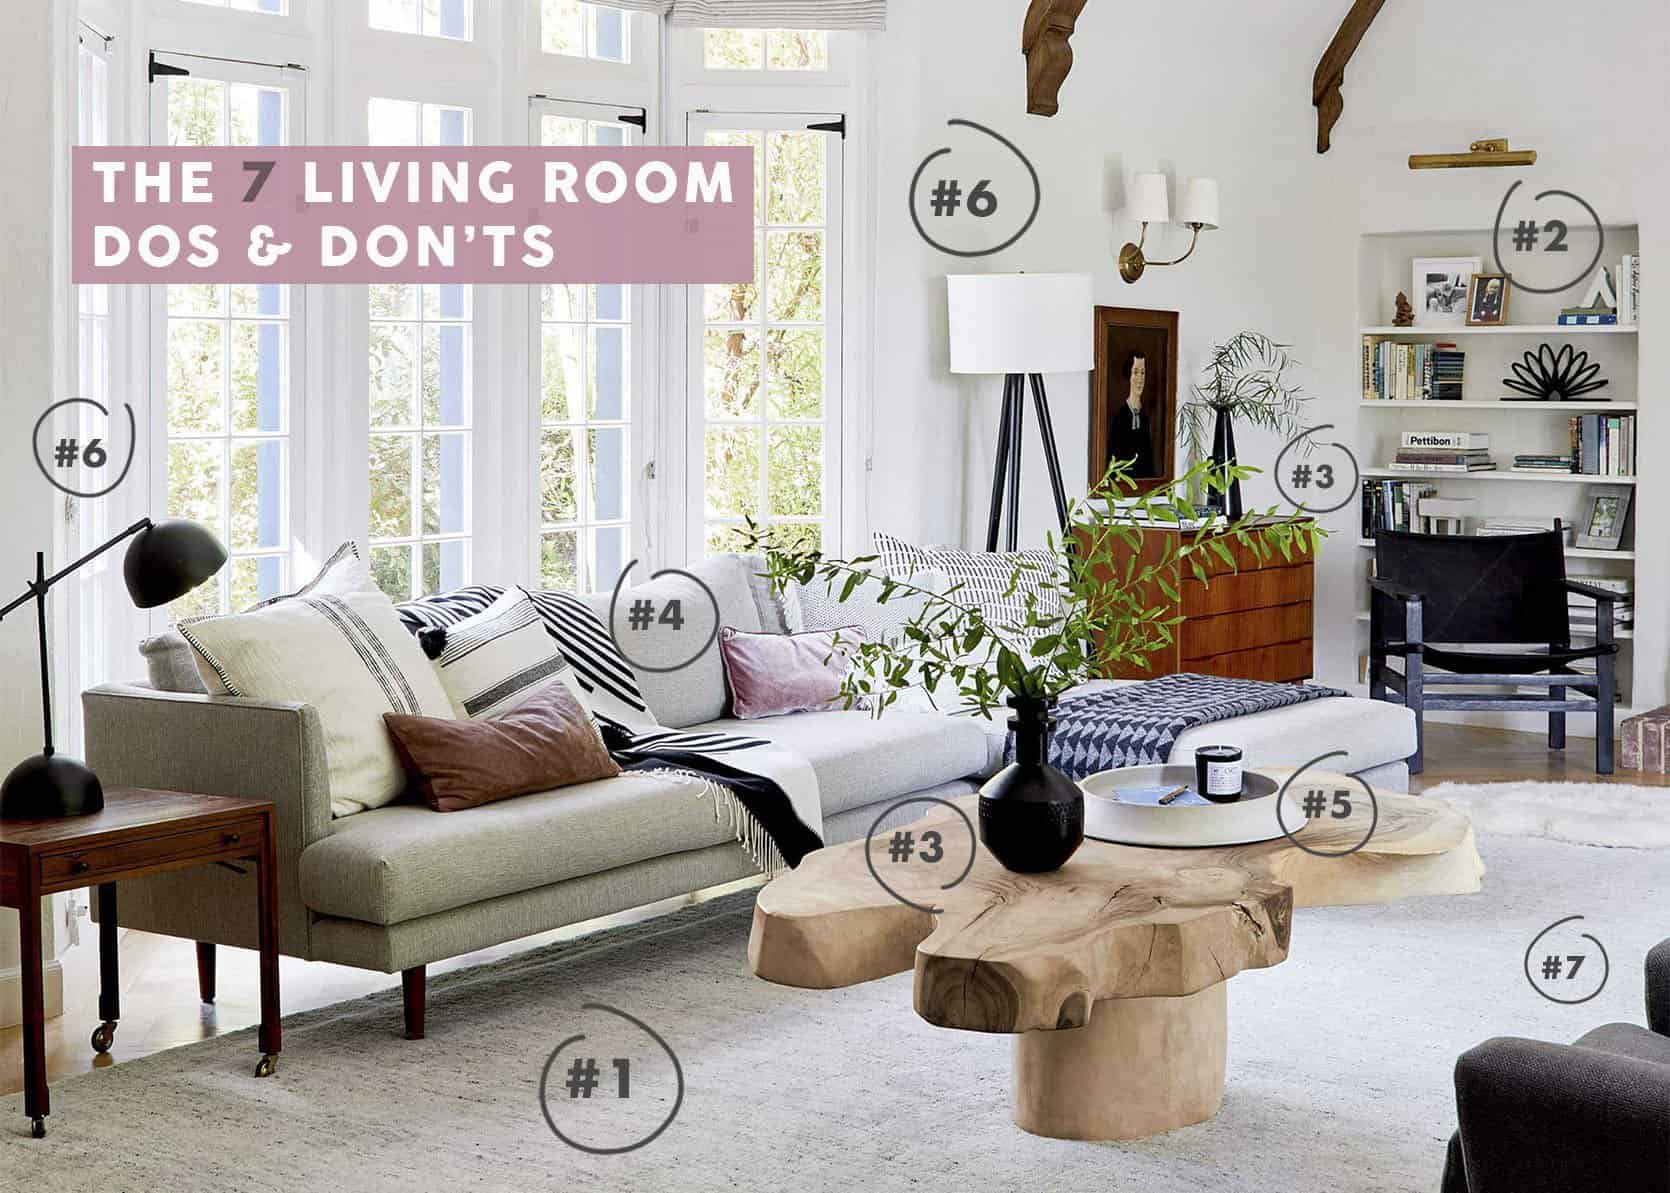 classy living room furniture